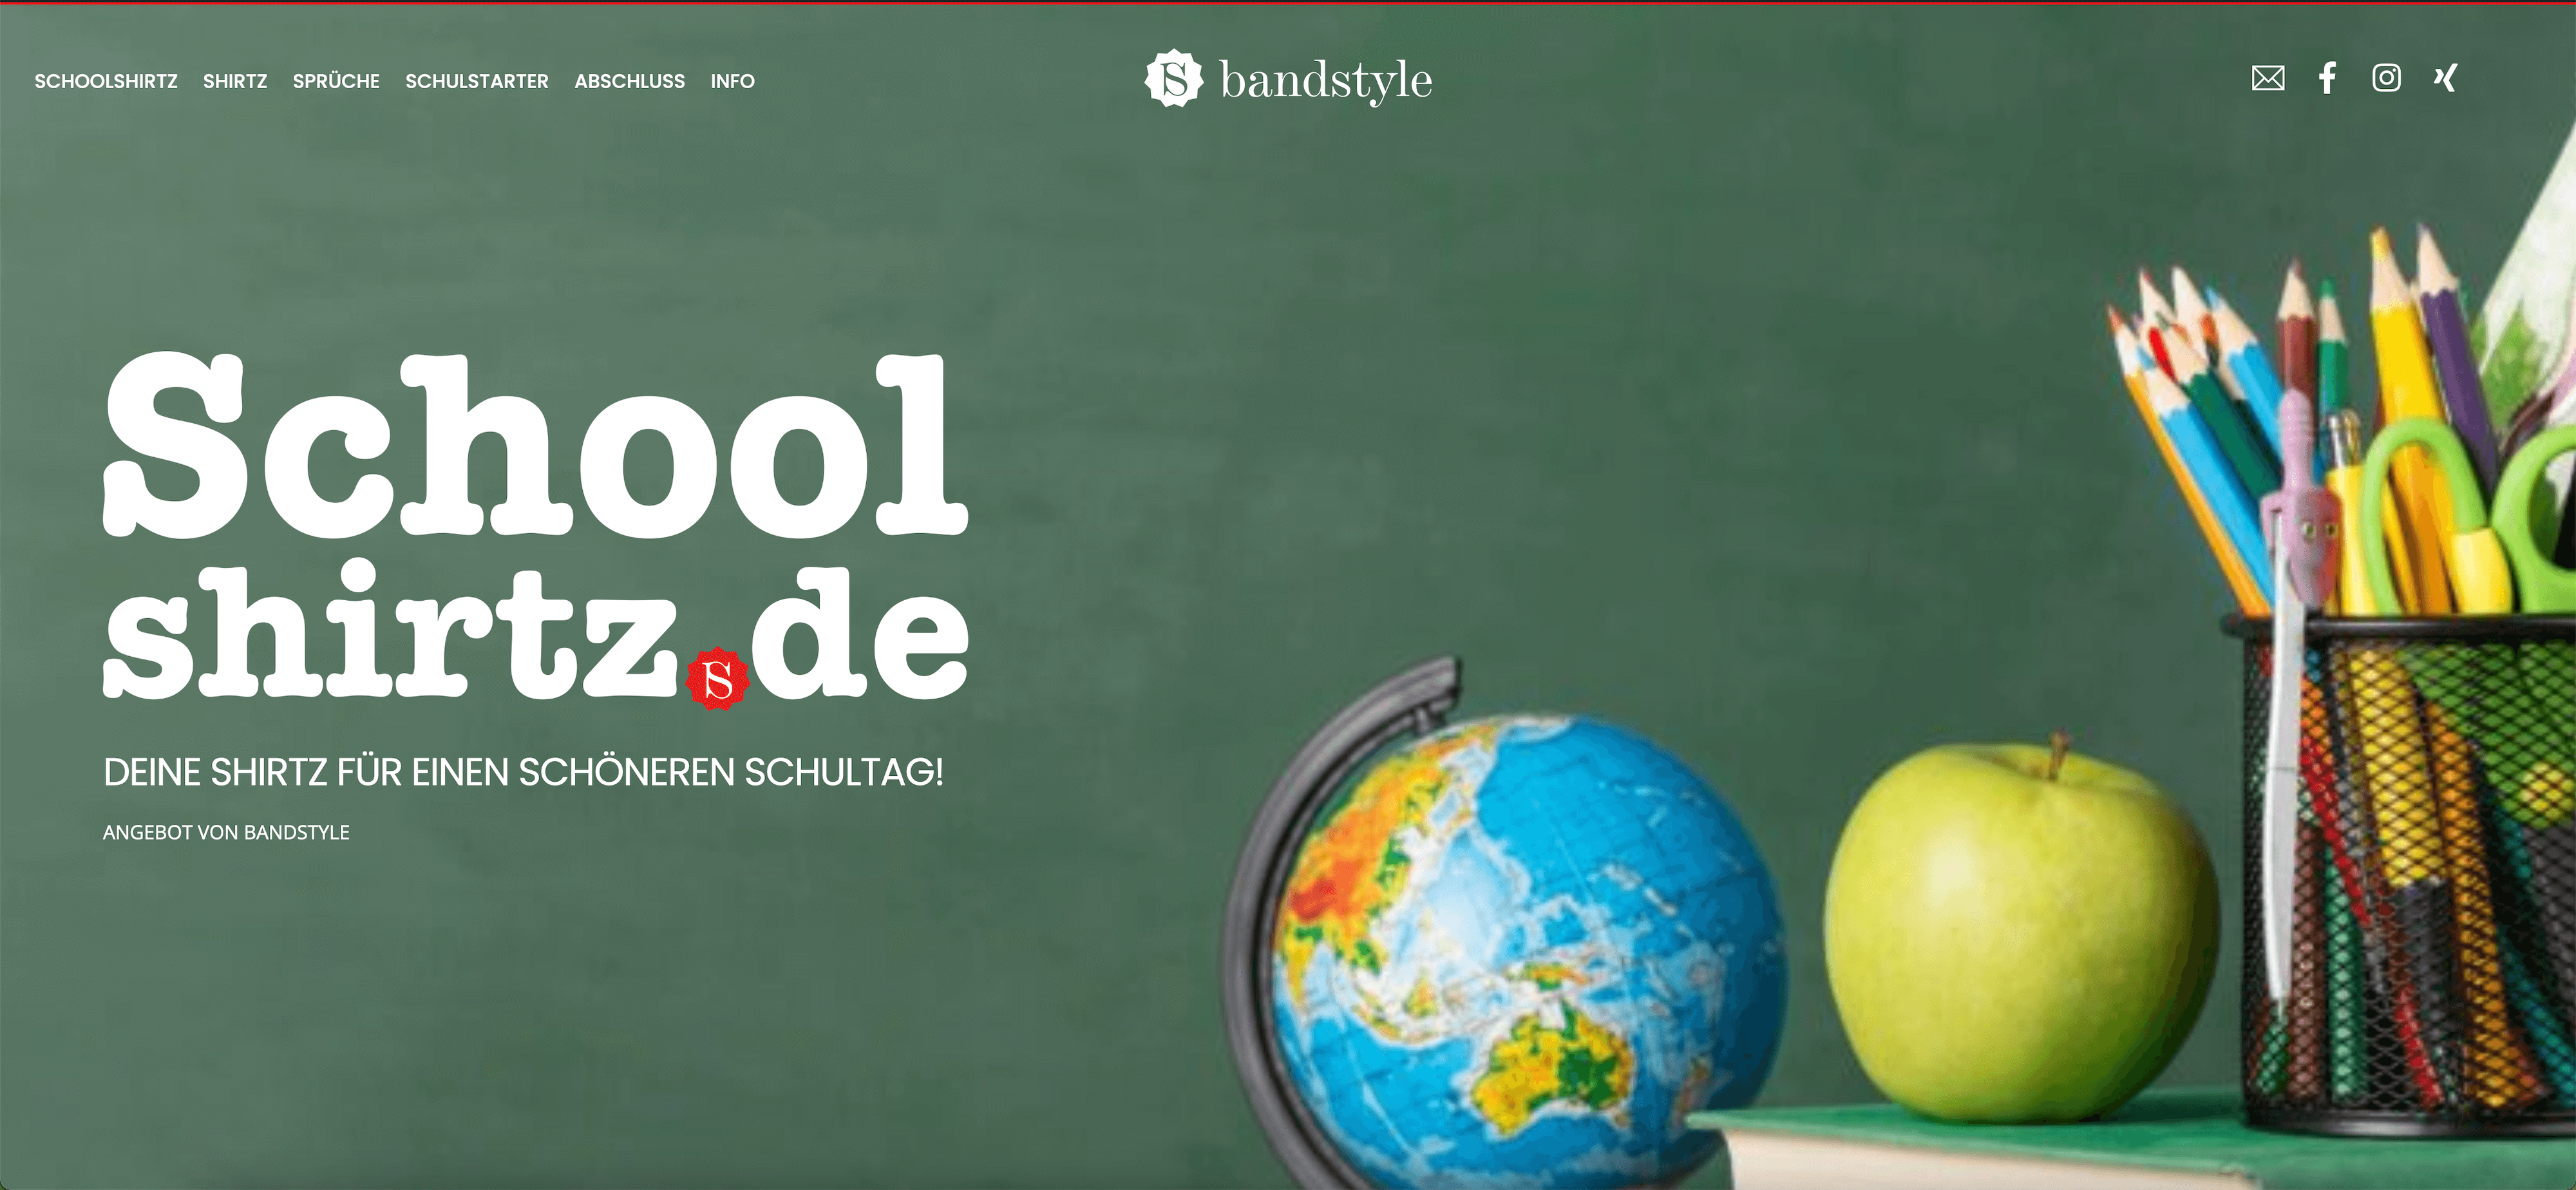 Bandstyle-Schoolshirtz-abishirtz-05